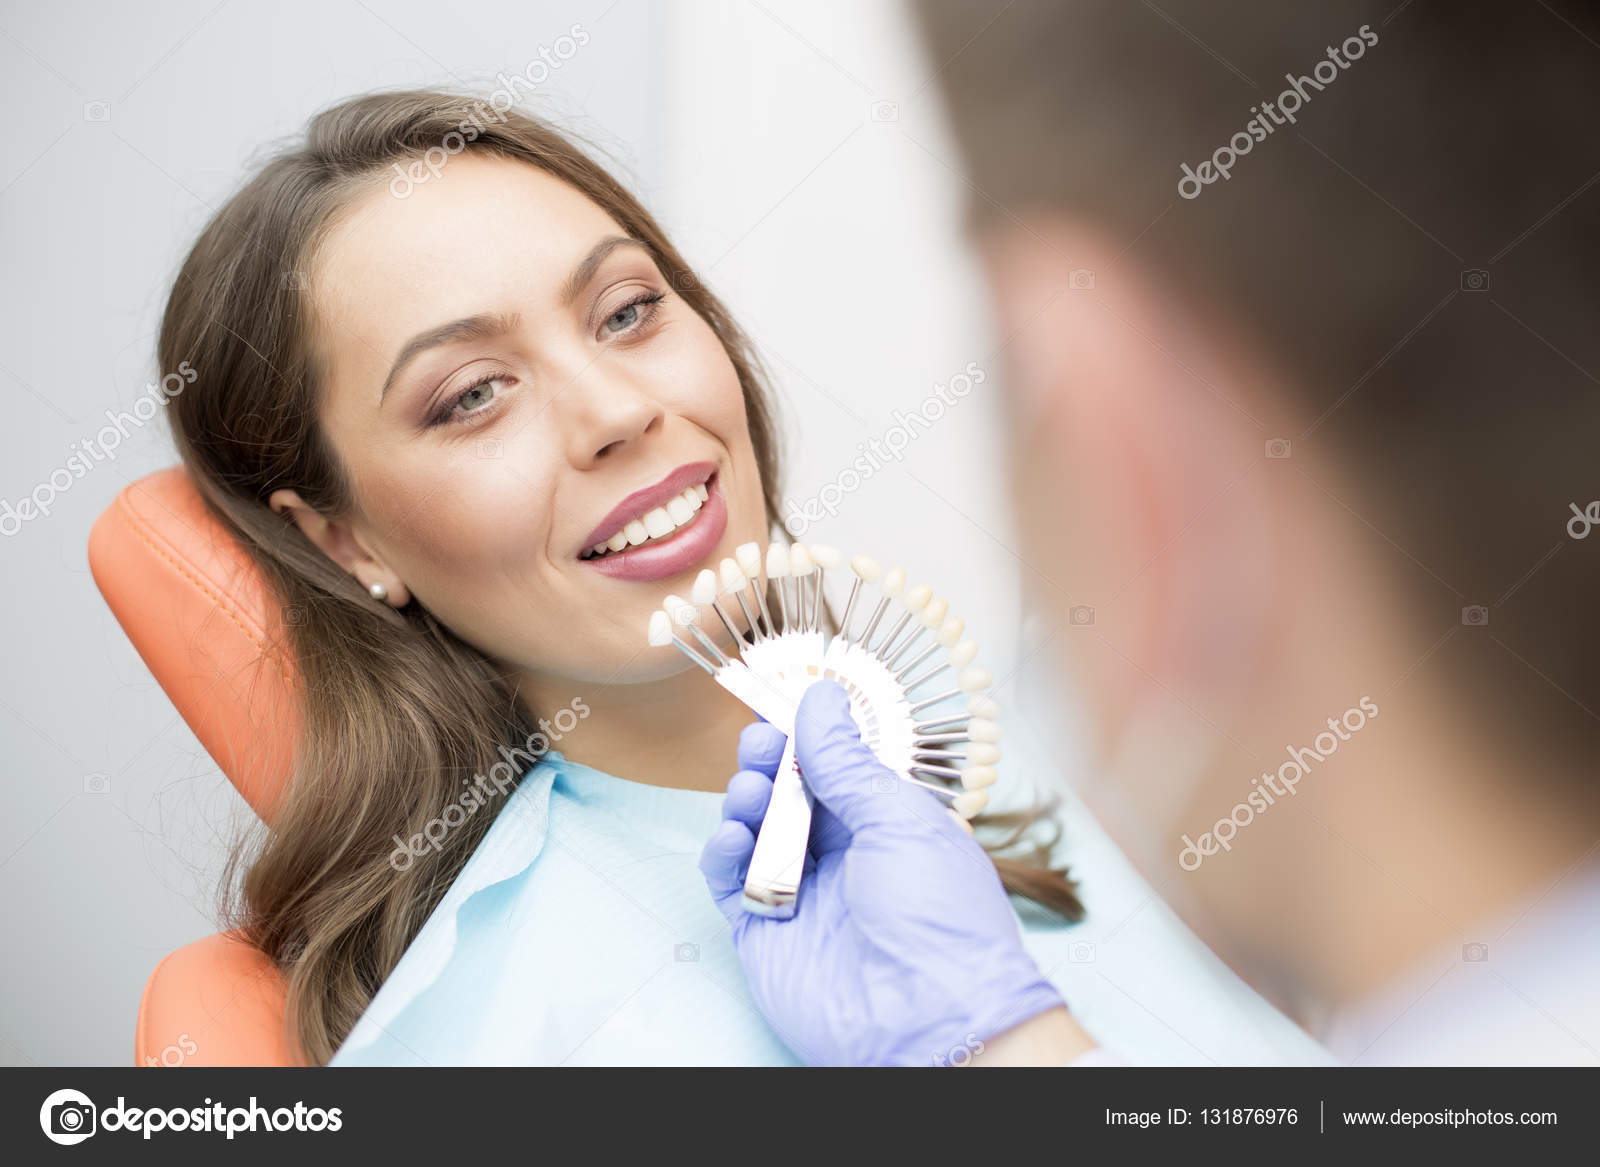 depositphotos_131876976-stock-photo-dental-care-concept.jpg